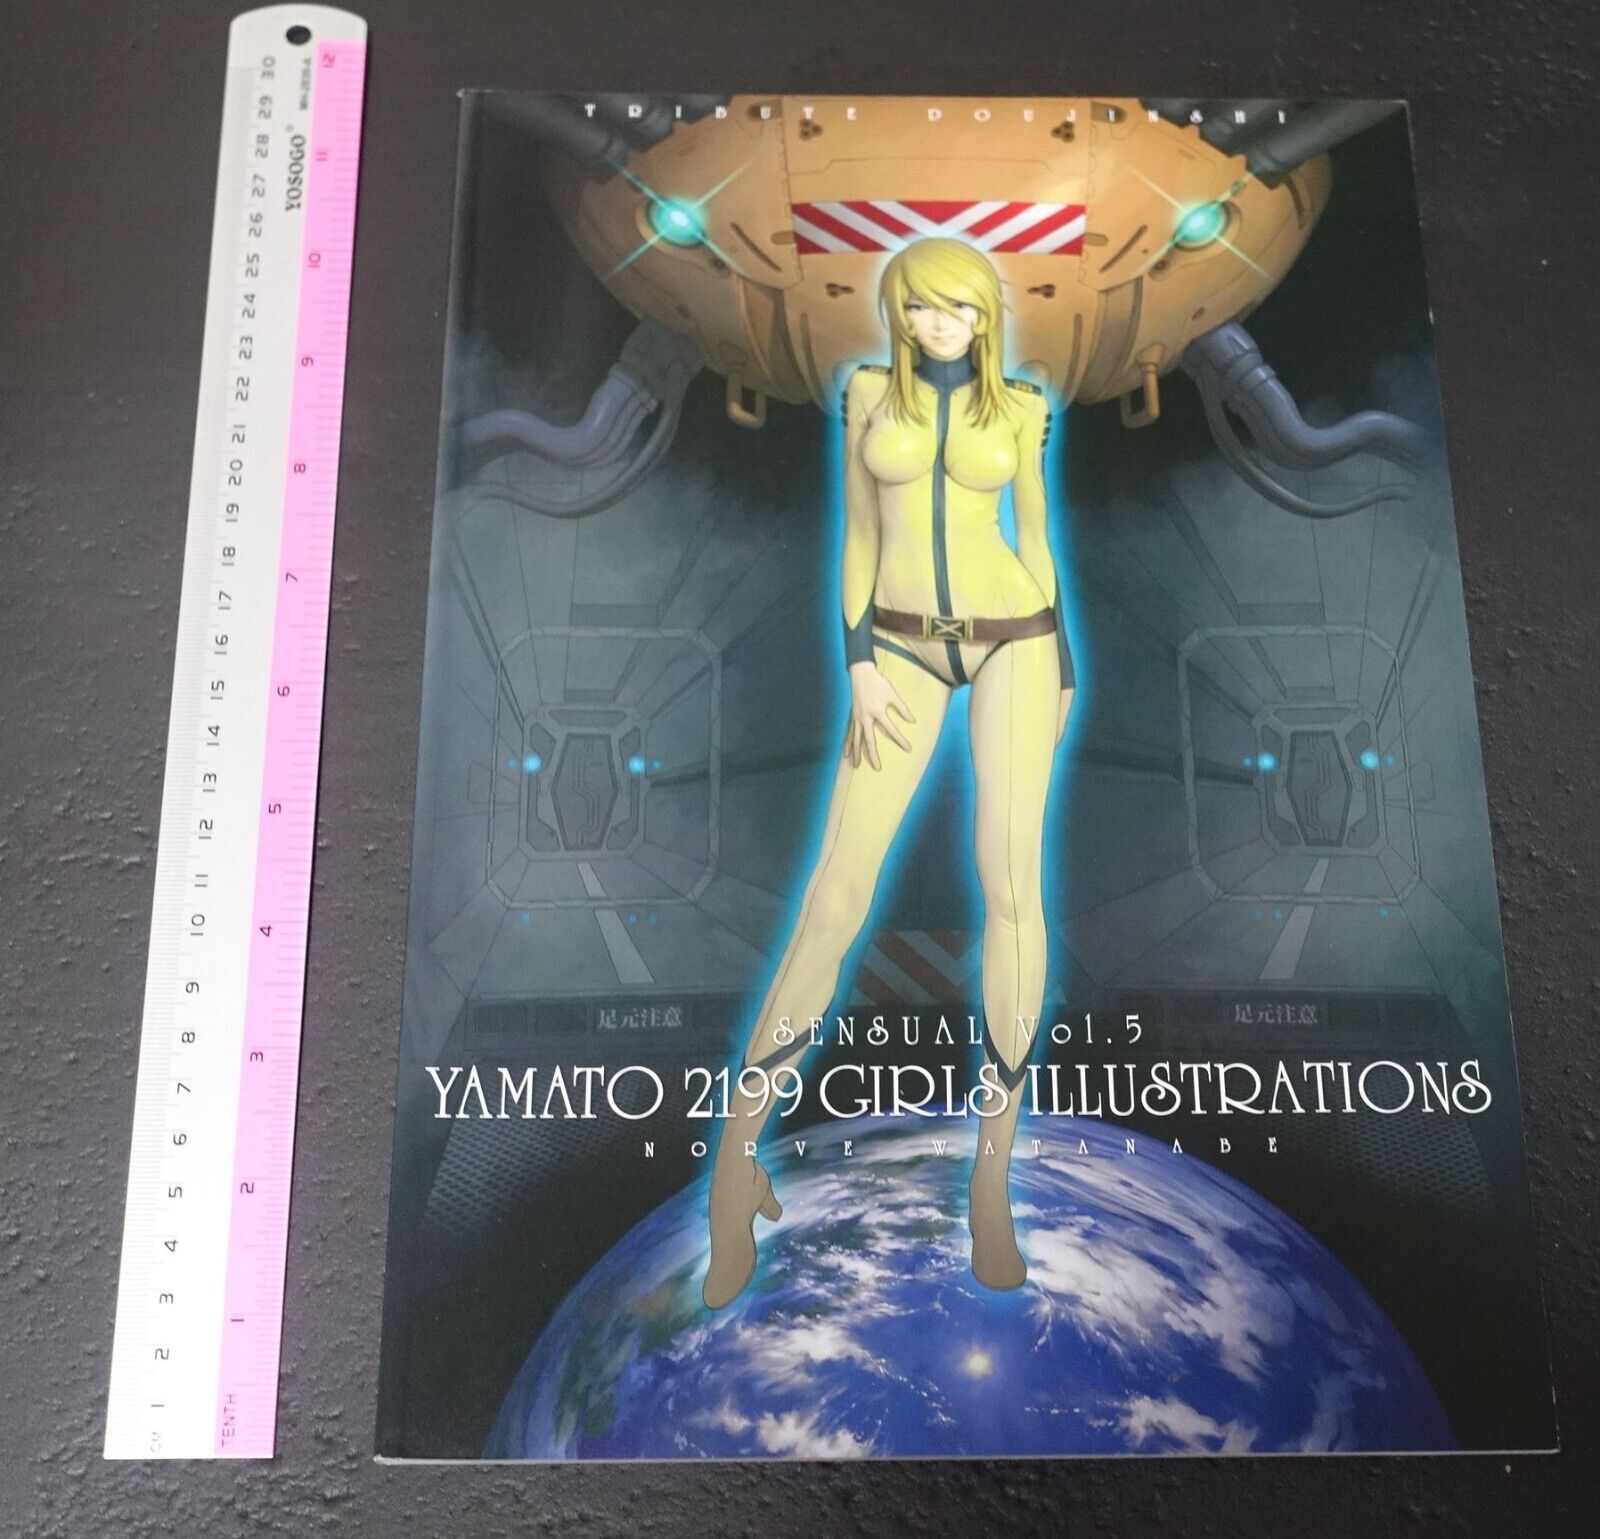 Castlism STAR BLAZERS Fan Art Book YAMATO 2199 GIRLS ILLUSTRATIONS 1 